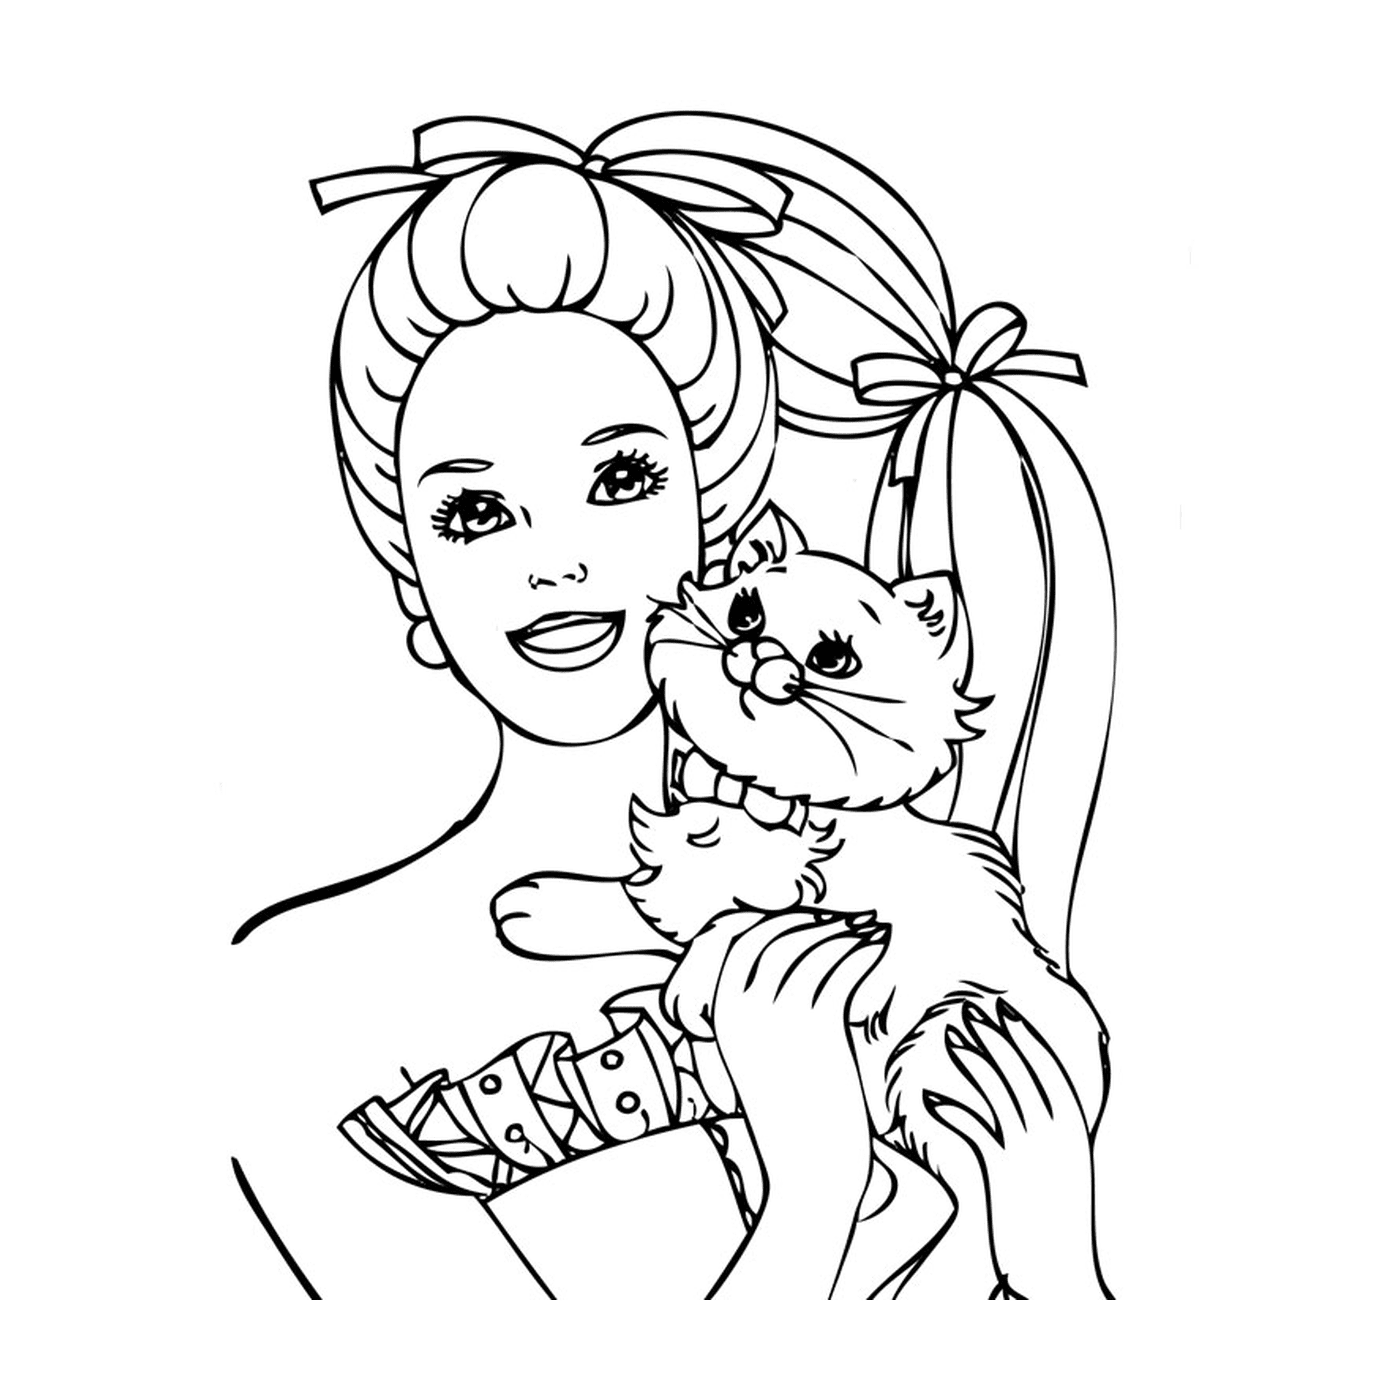  Барби Мушкетер с женщиной, держащей кошку 